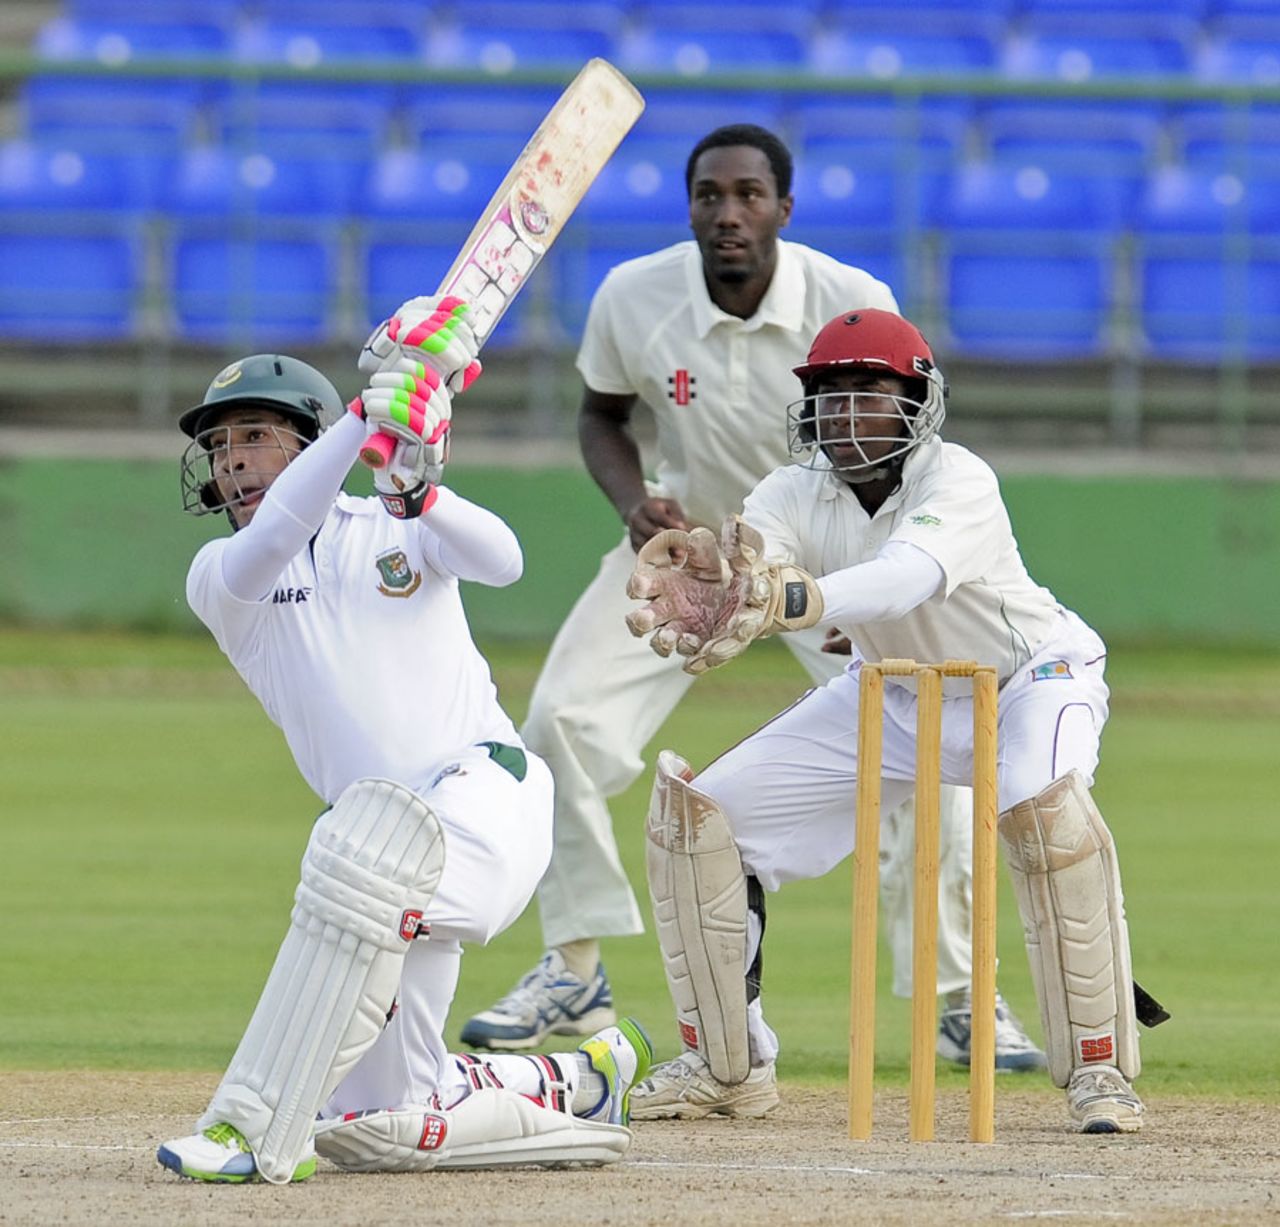 Mushfiqur Rahim hits one over the top, St Kitts & Nevis v Bangladeshis, tour game, 1st day, St Kitts, August 30, 2014